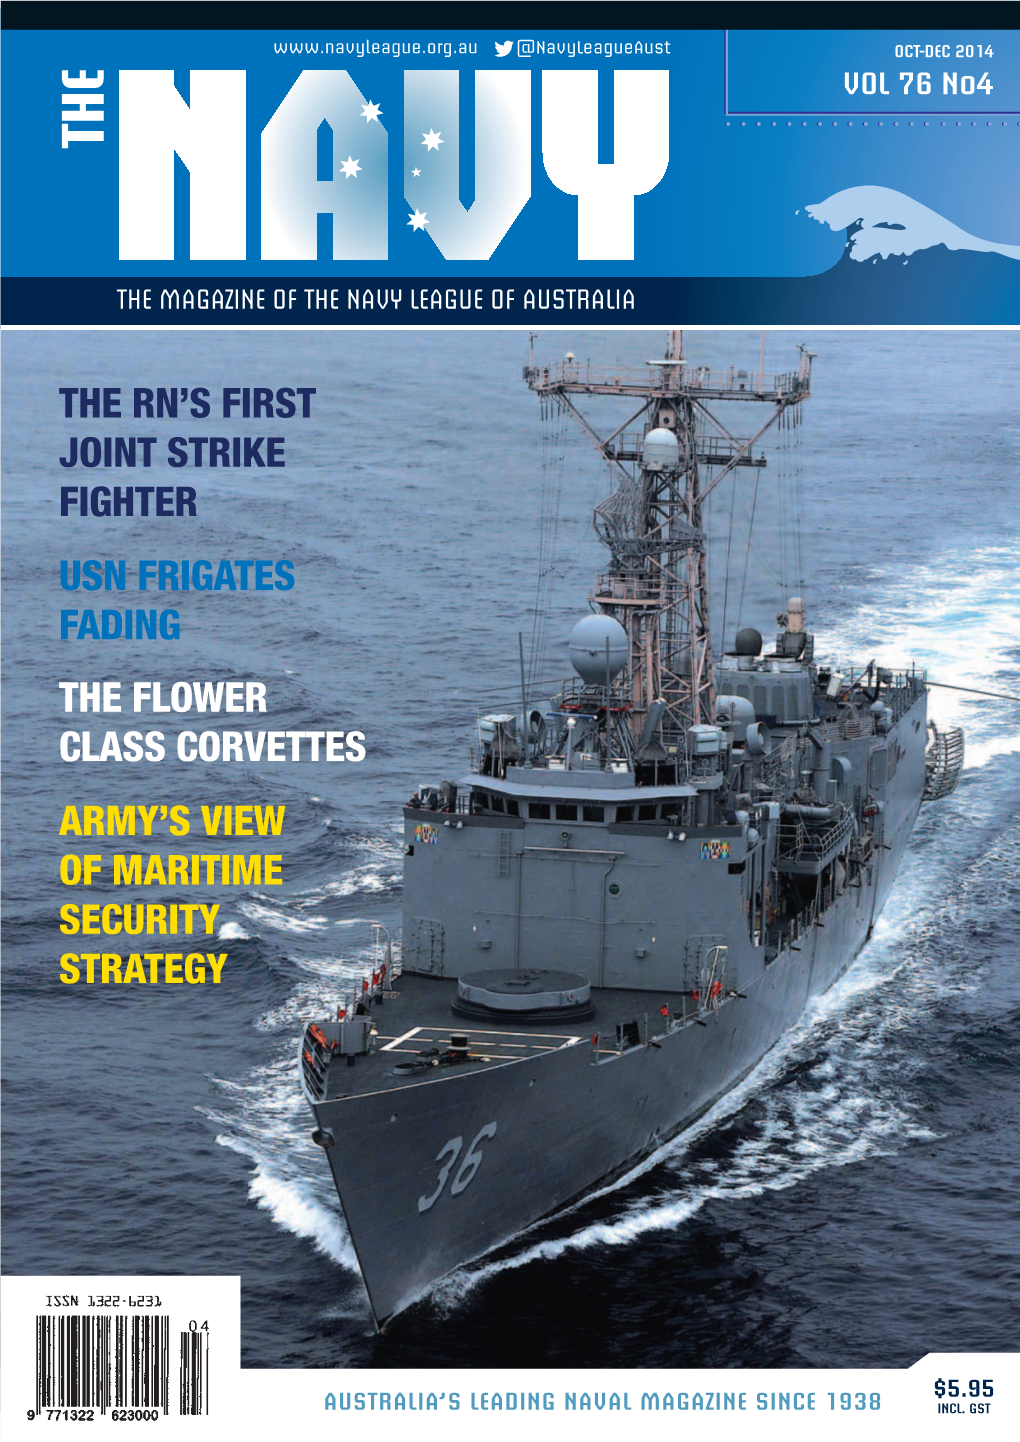 The Navy Vol 76 No 4 Oct 2014